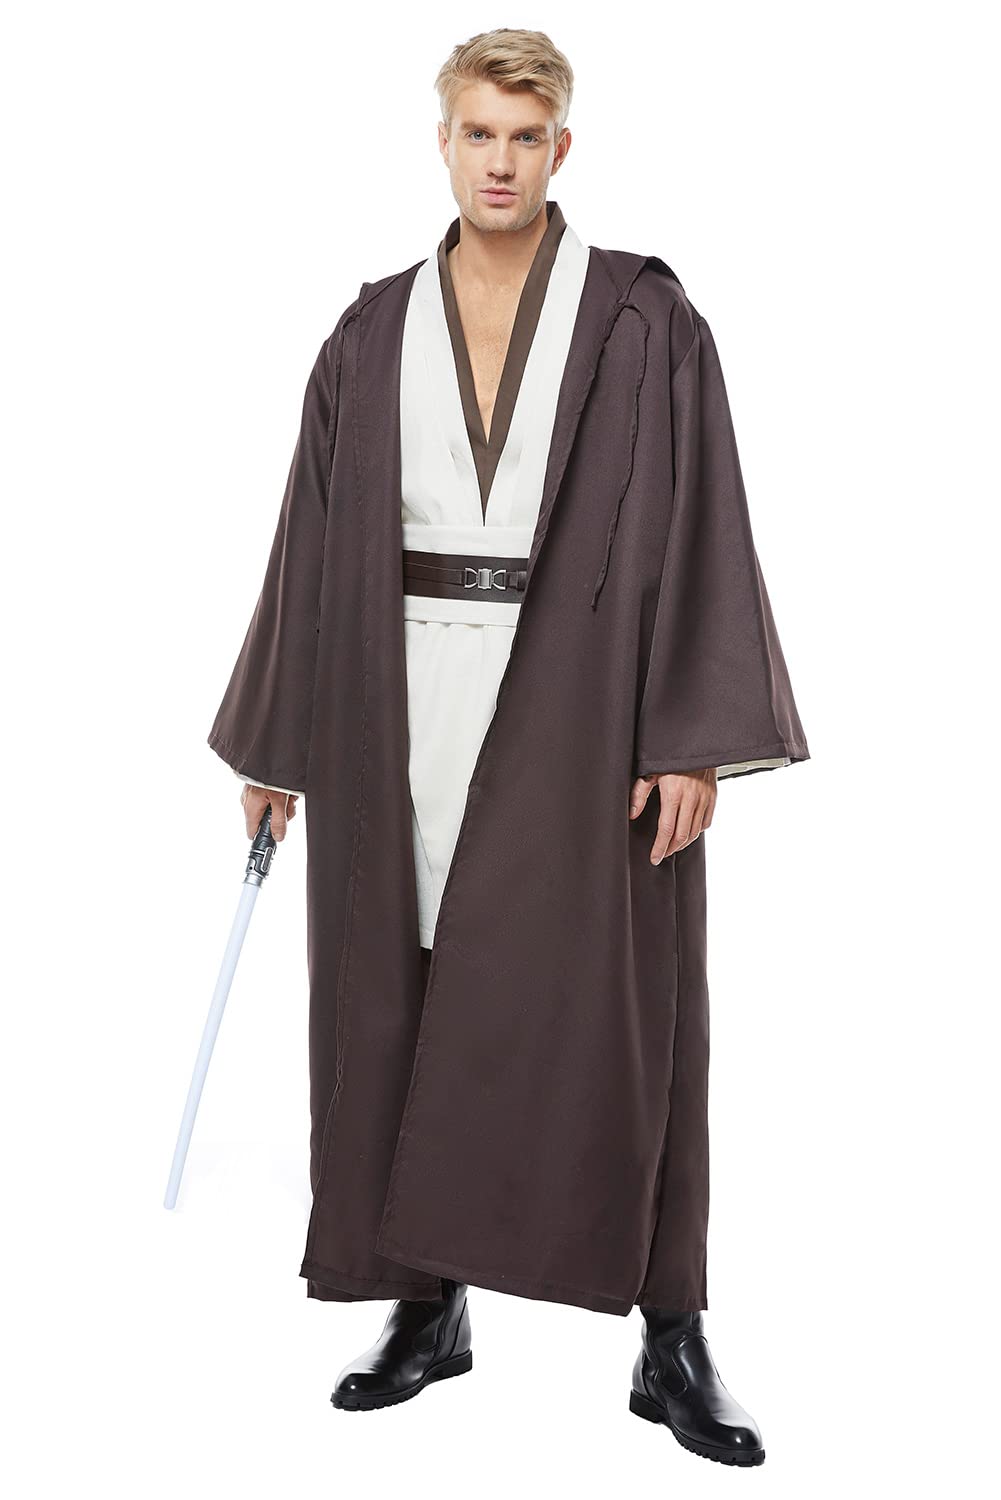 Kostor Obi Wan Kenobi Cospaly Kostüm Tunika Herren Mantel Weiß, Braun/Beige, X-Small